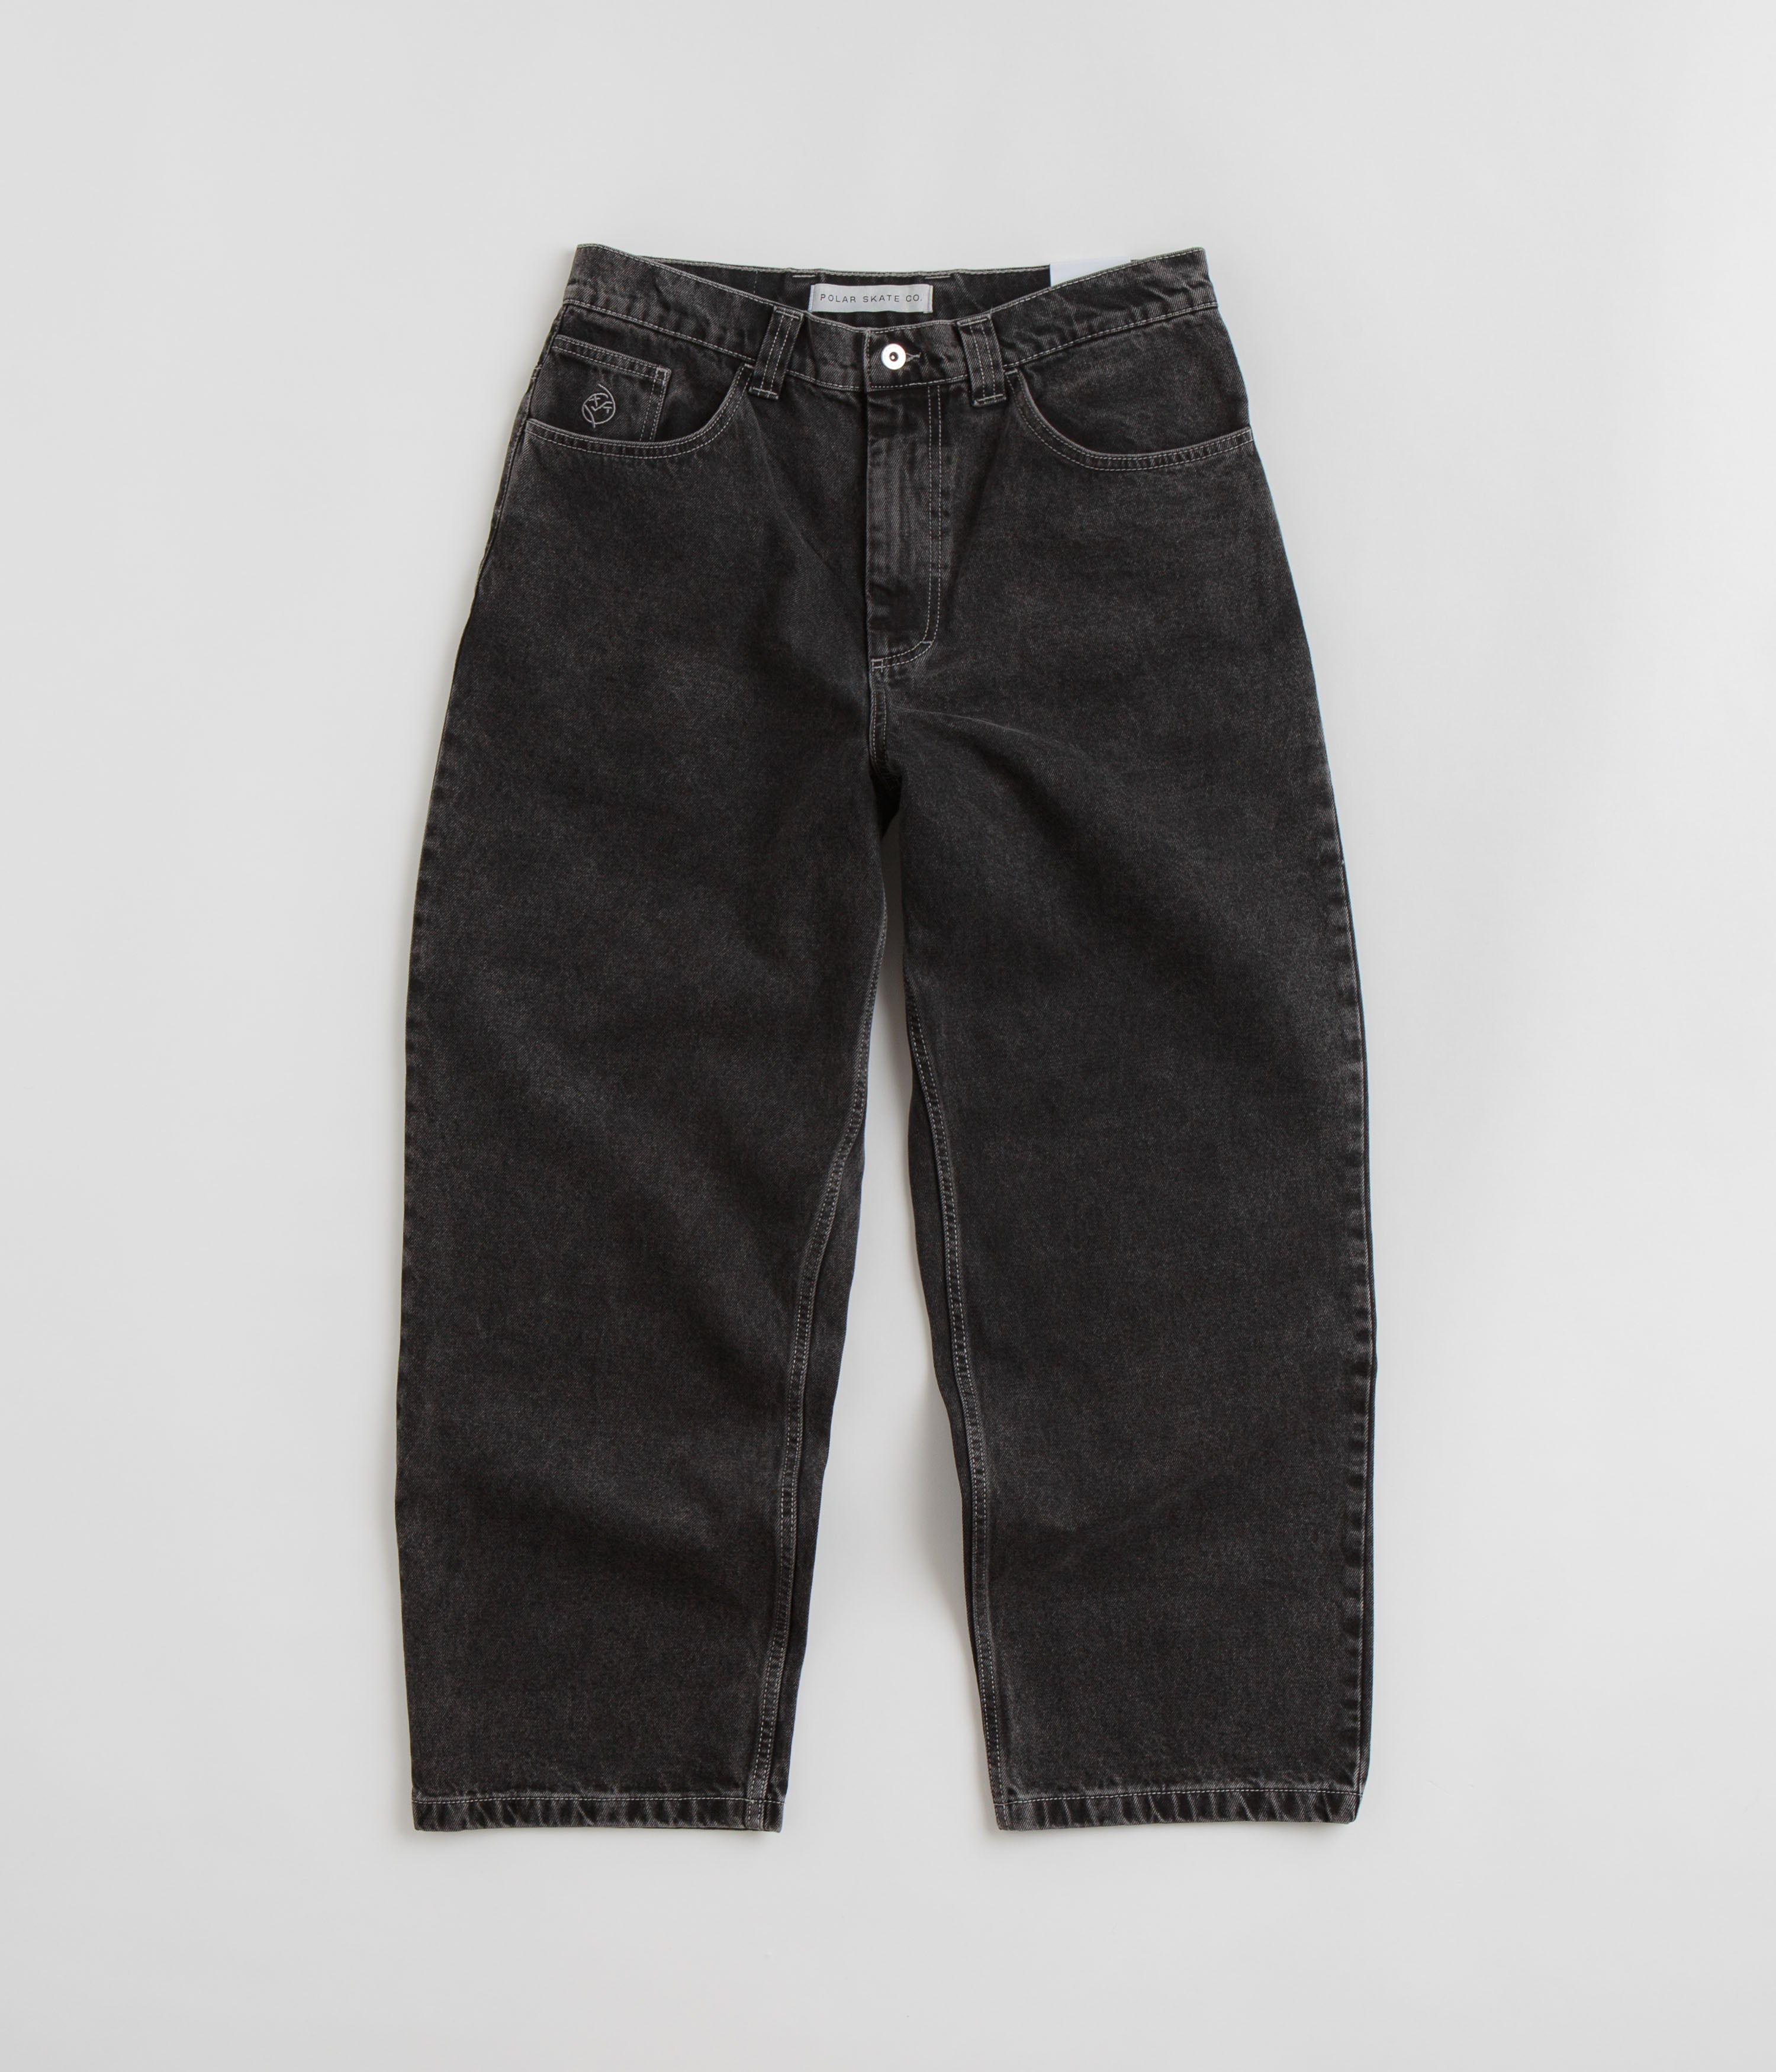 Yardsale Ripper Jeans - Black | Flatspot